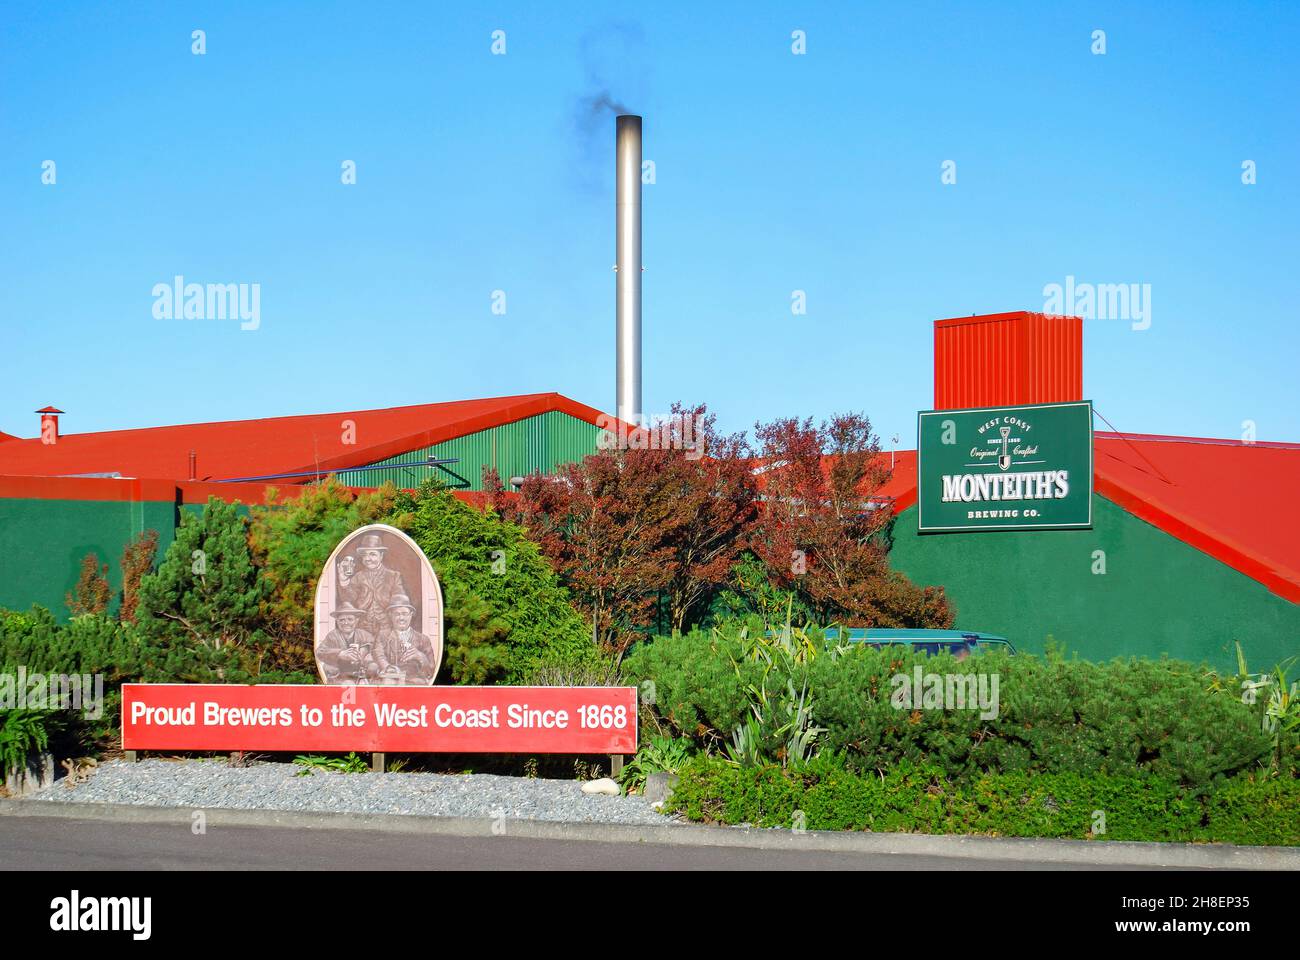 Monteith's Brewery Company, Greymouth, Grigio distretto, West Coast, Isola del Sud, Nuova Zelanda Foto Stock